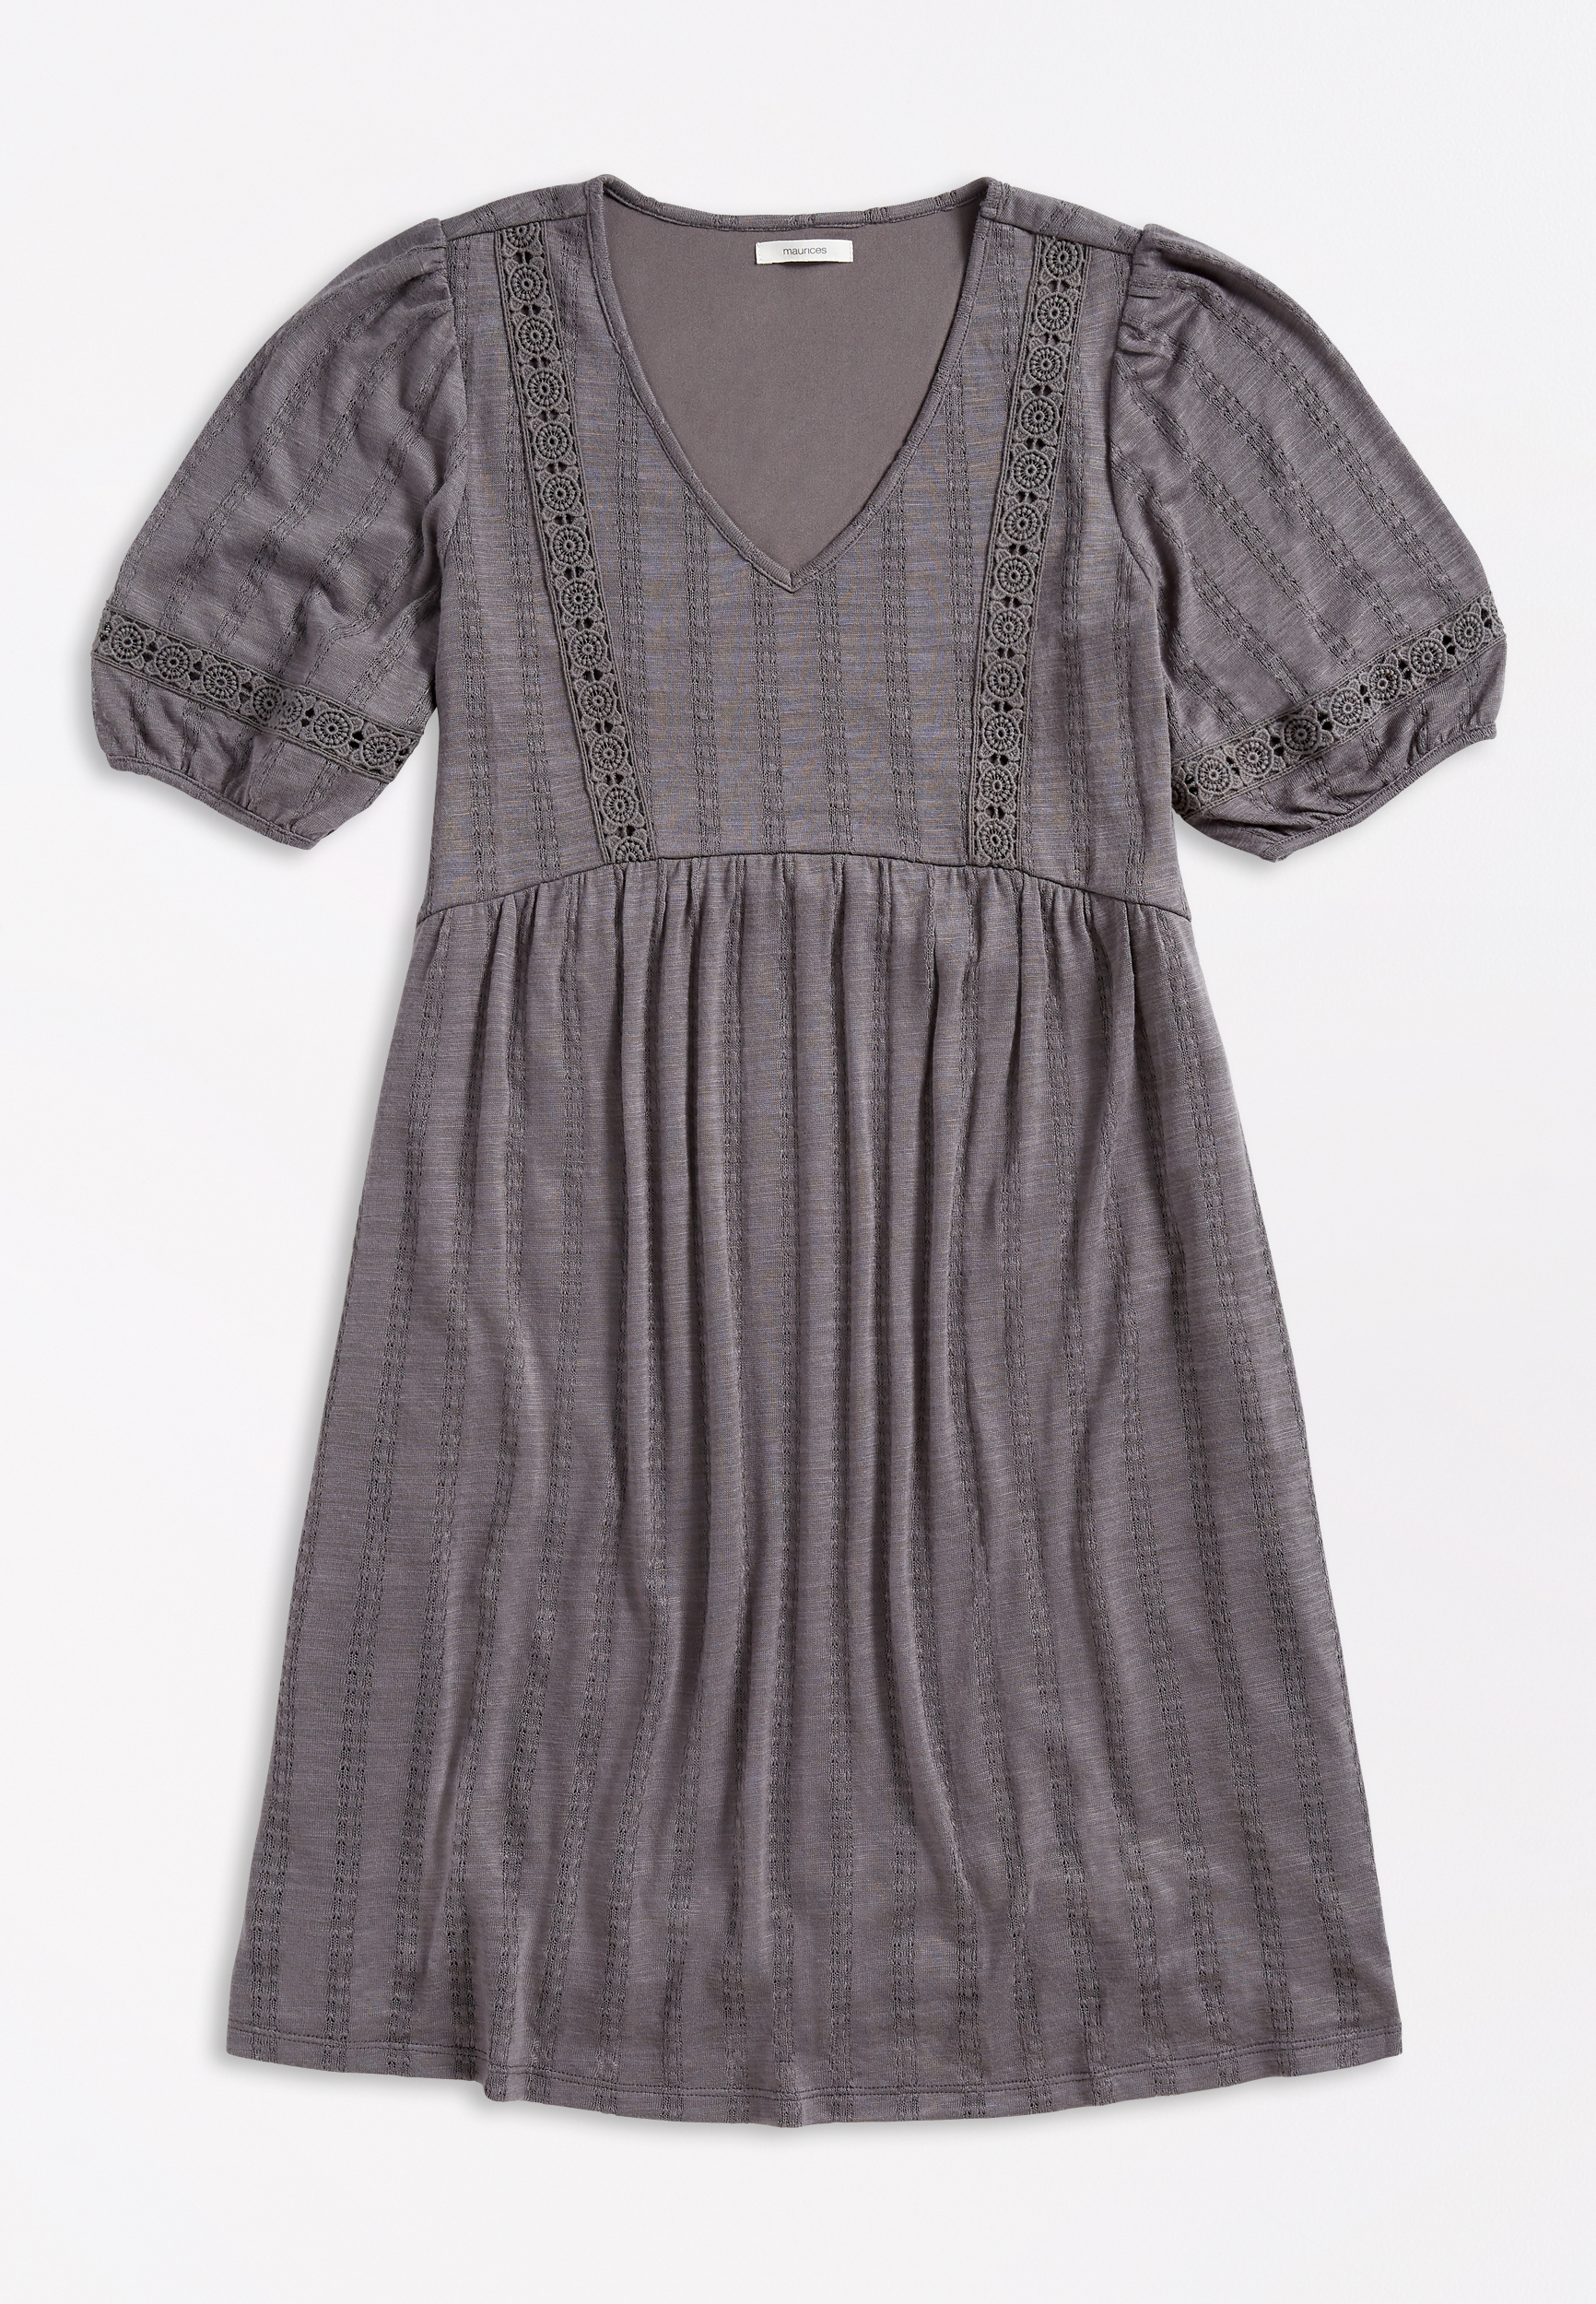 gray babydoll dress